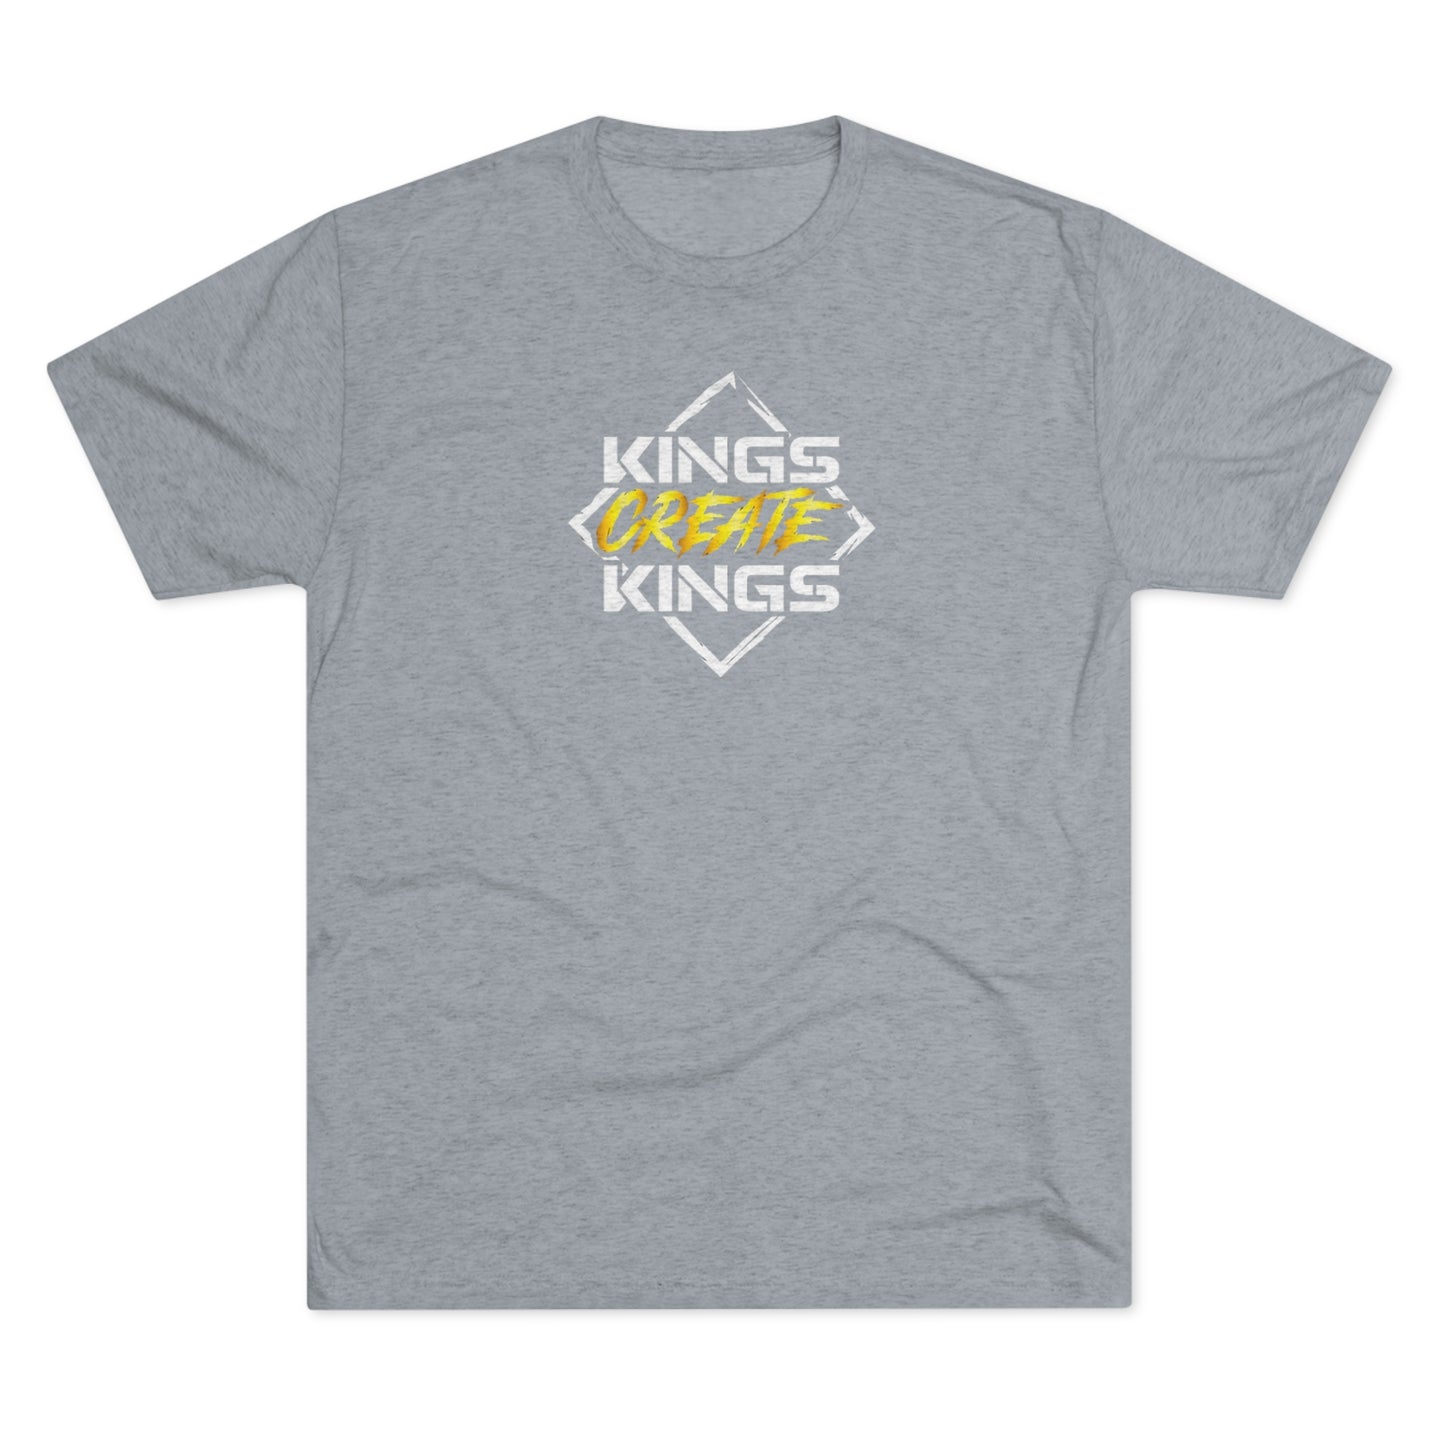 Kings Create Kings Gold Logo Tri-Blend Crew Tee